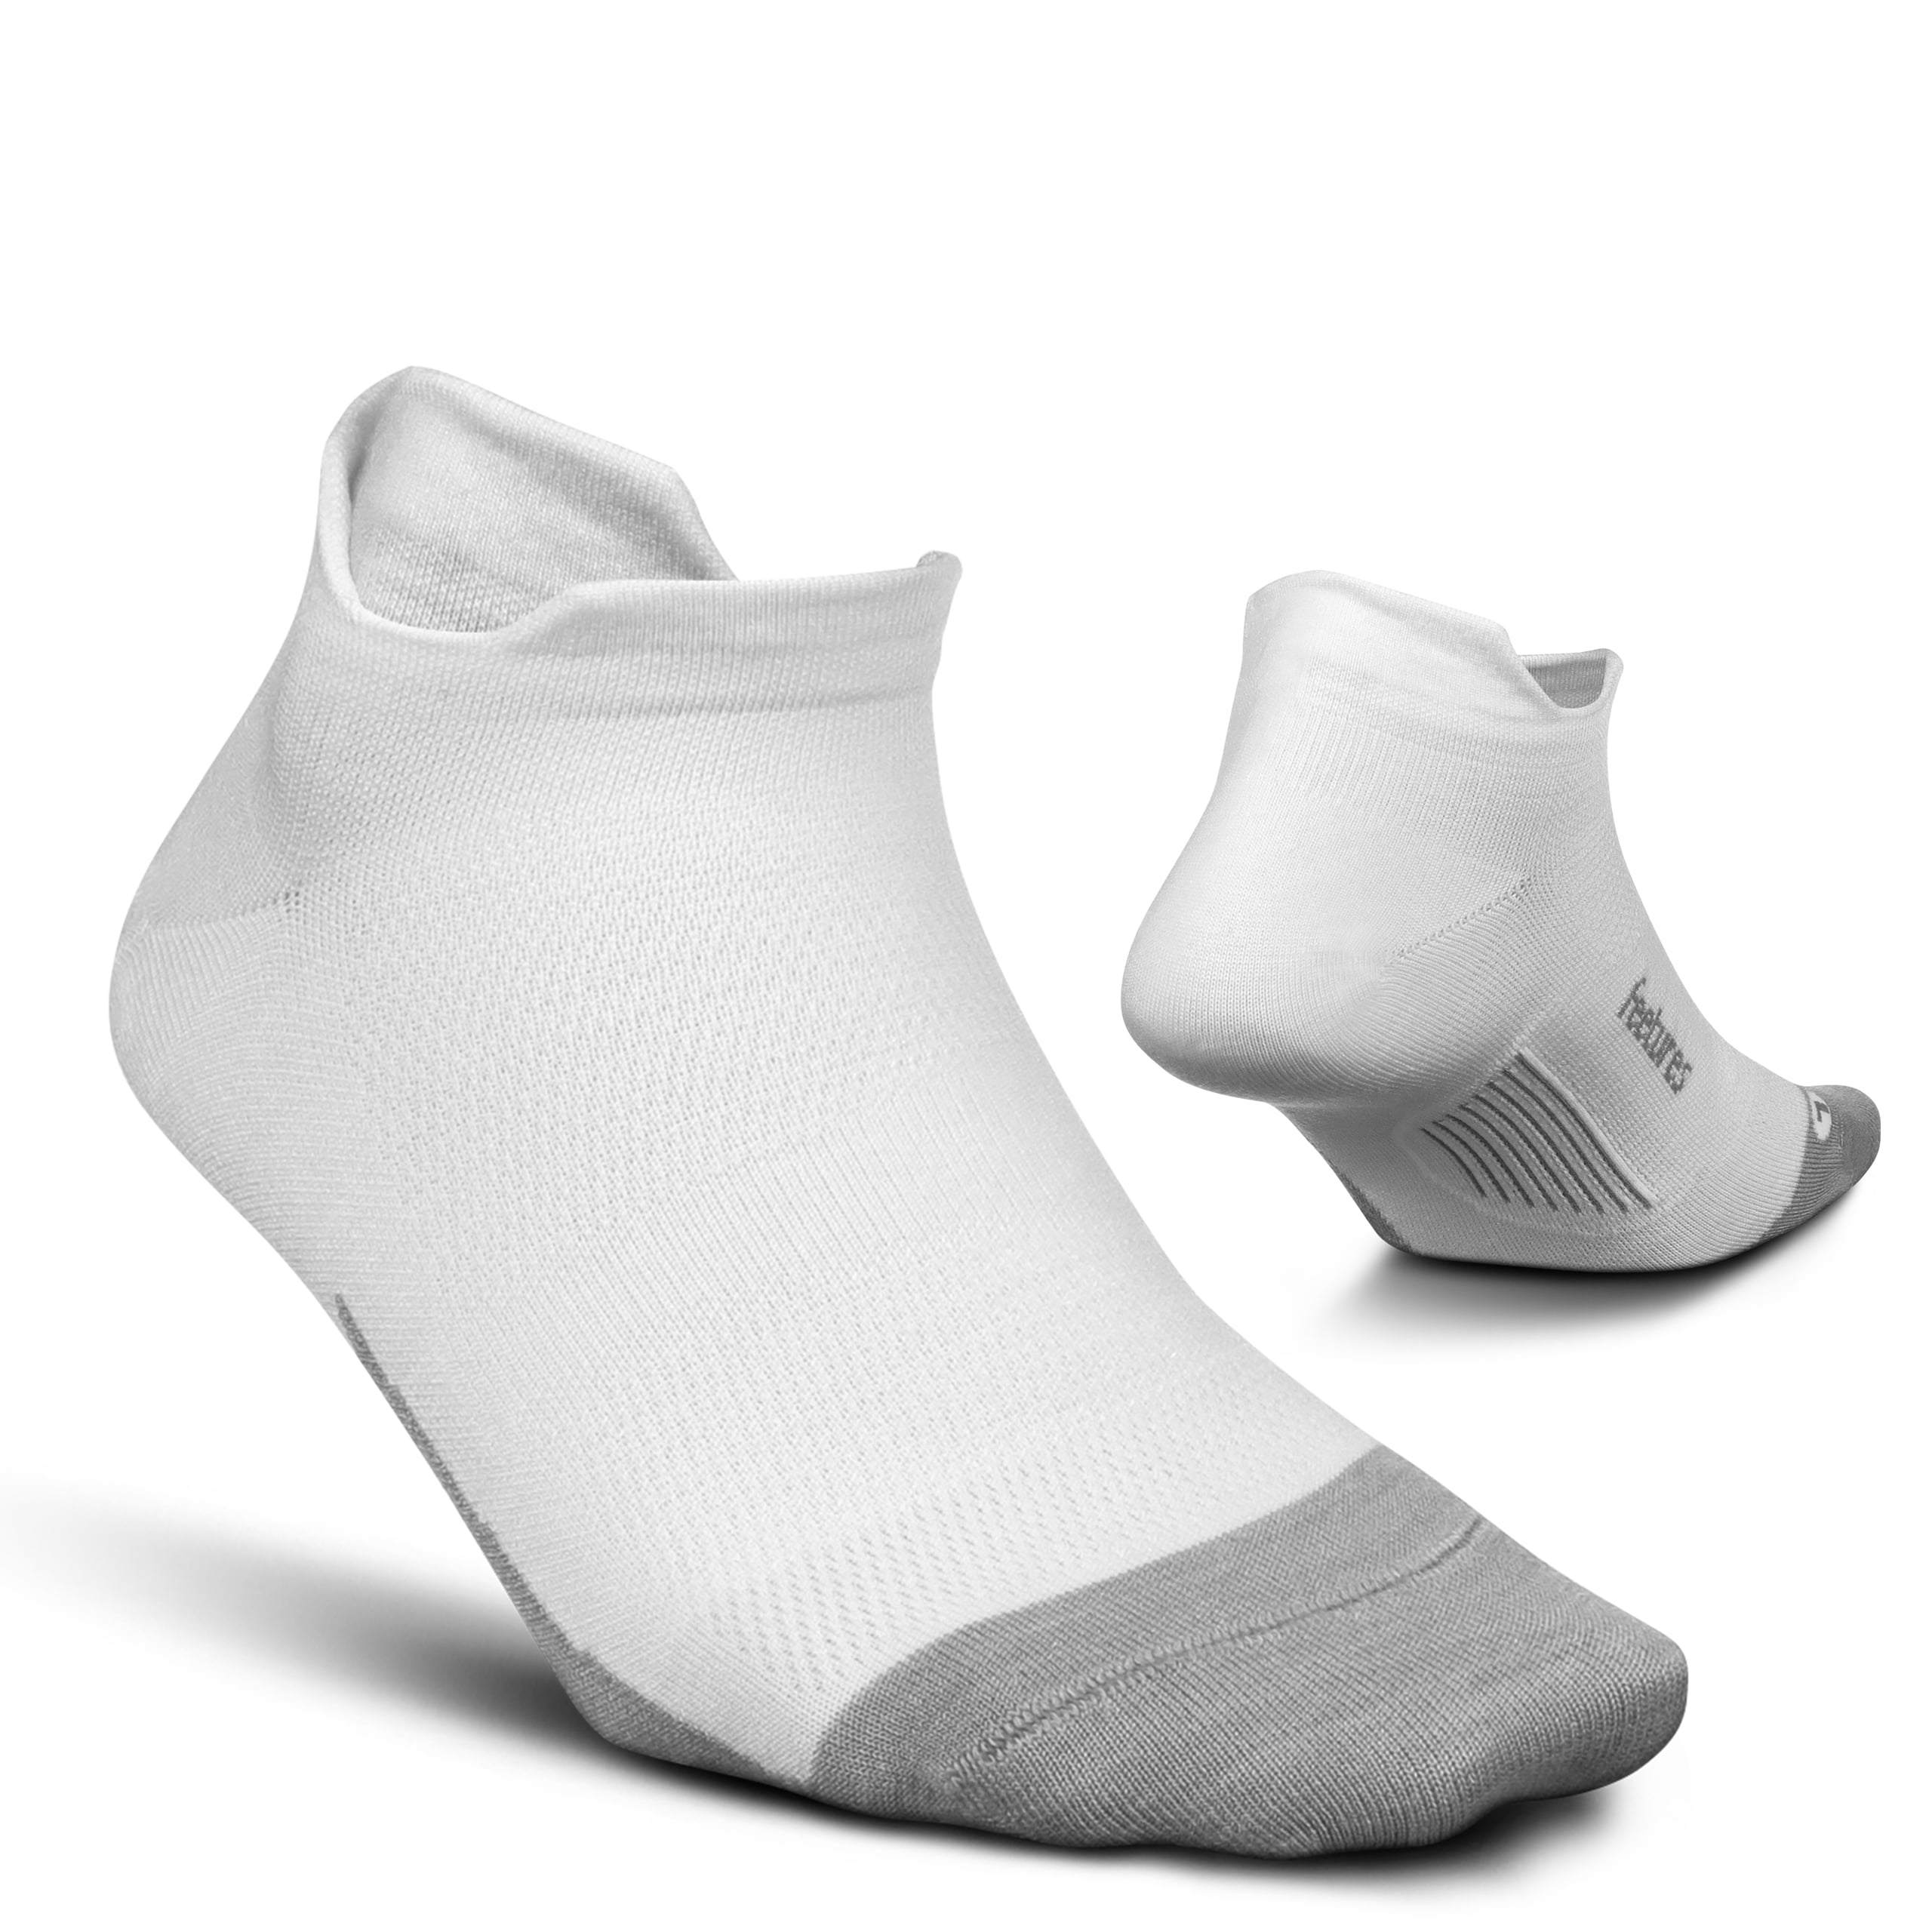 Feetures Merino Ultra Light No Show Tab Athletic Running Socks for Men and Women 